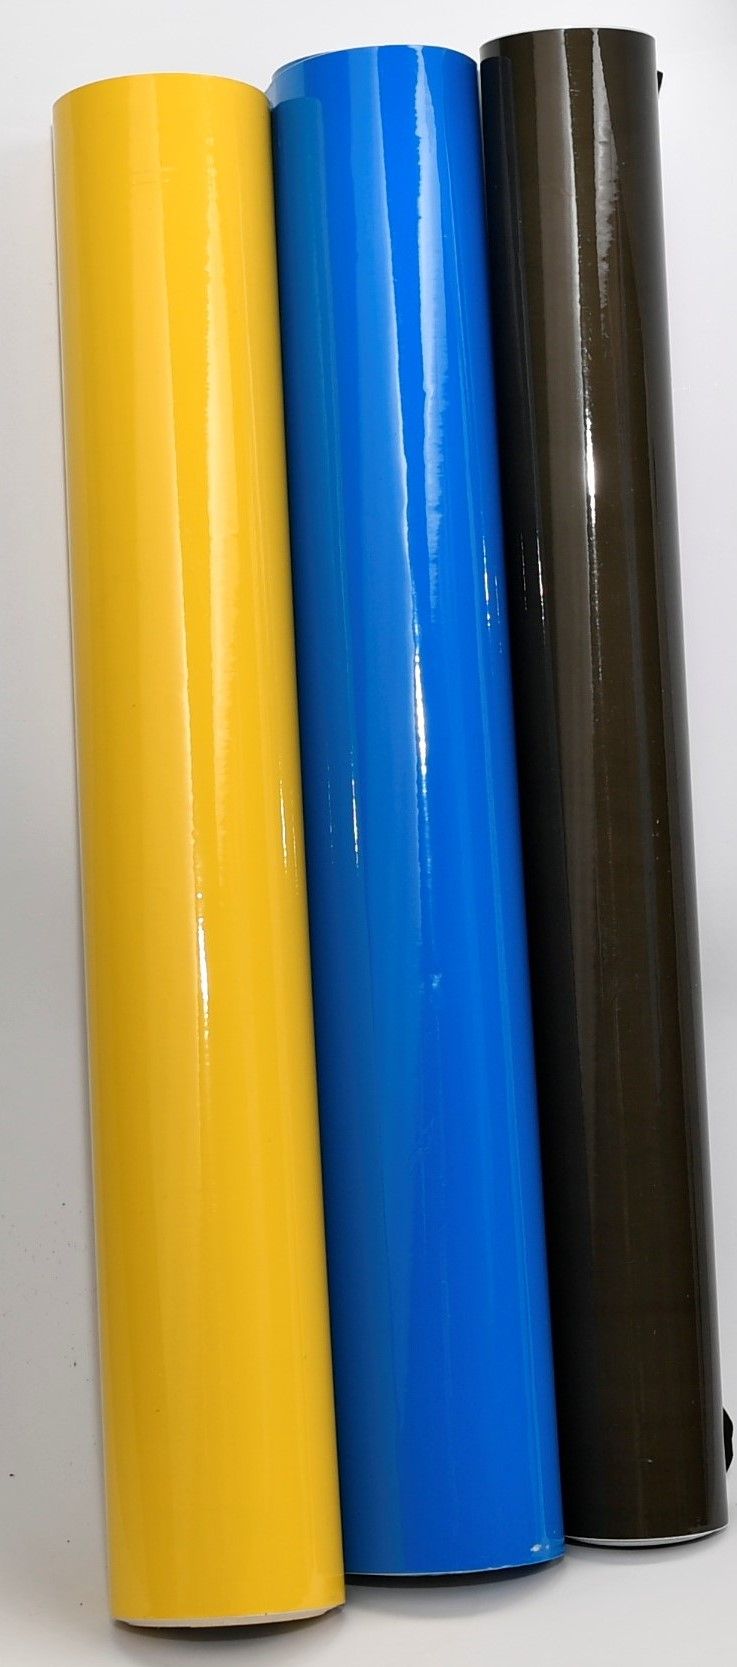 Celadon TPU Paint Protection Film - Paint Protection Film, High-Quality  Vinyl (PVC) Films and Sheets Manufacturer